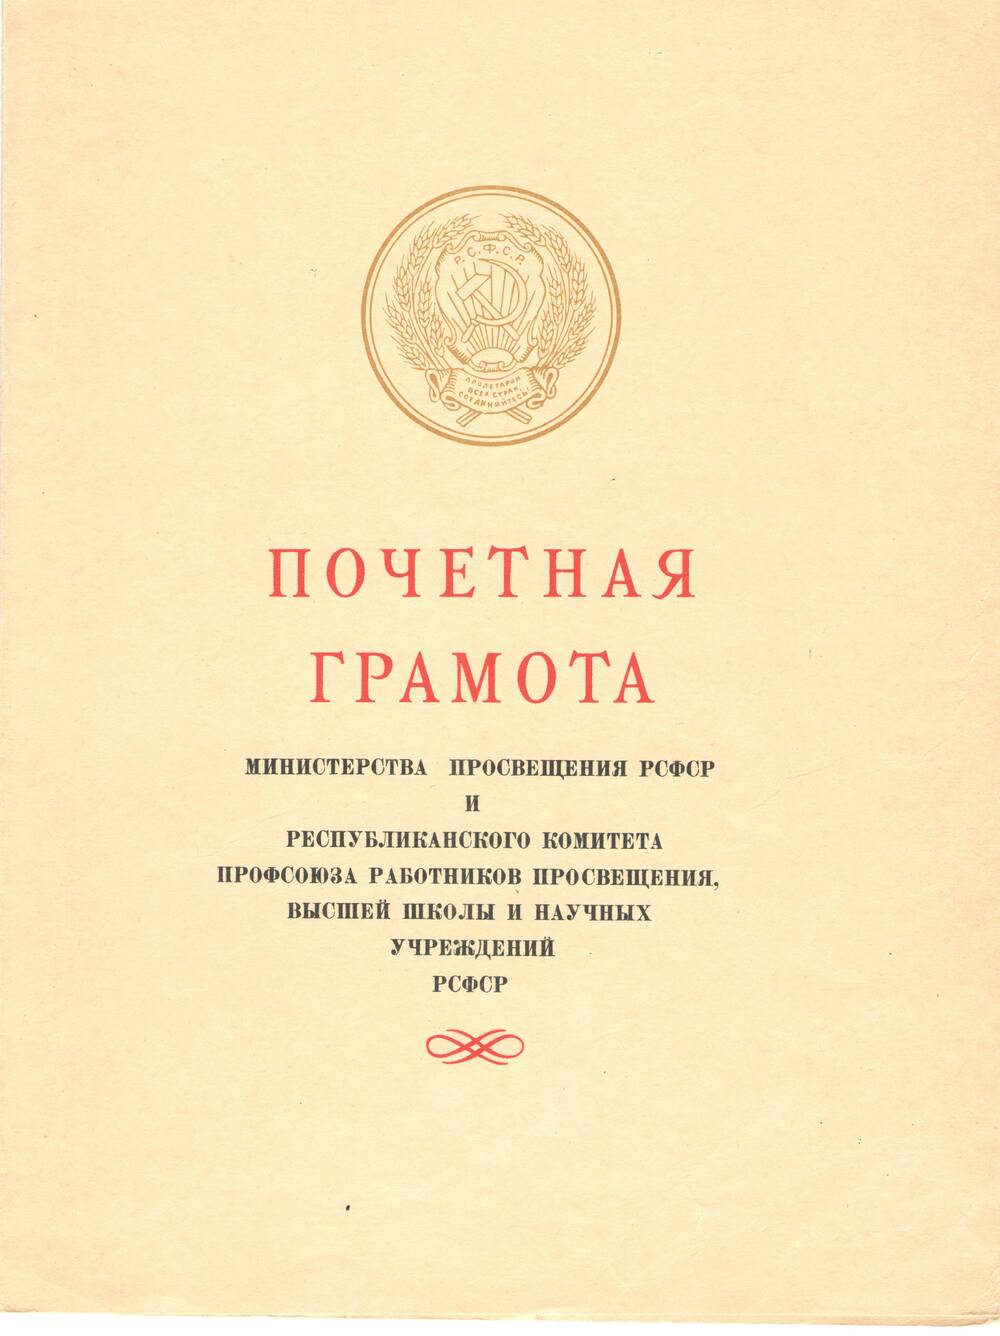 Почетная грамота № 89167 Афанасьева А. В.